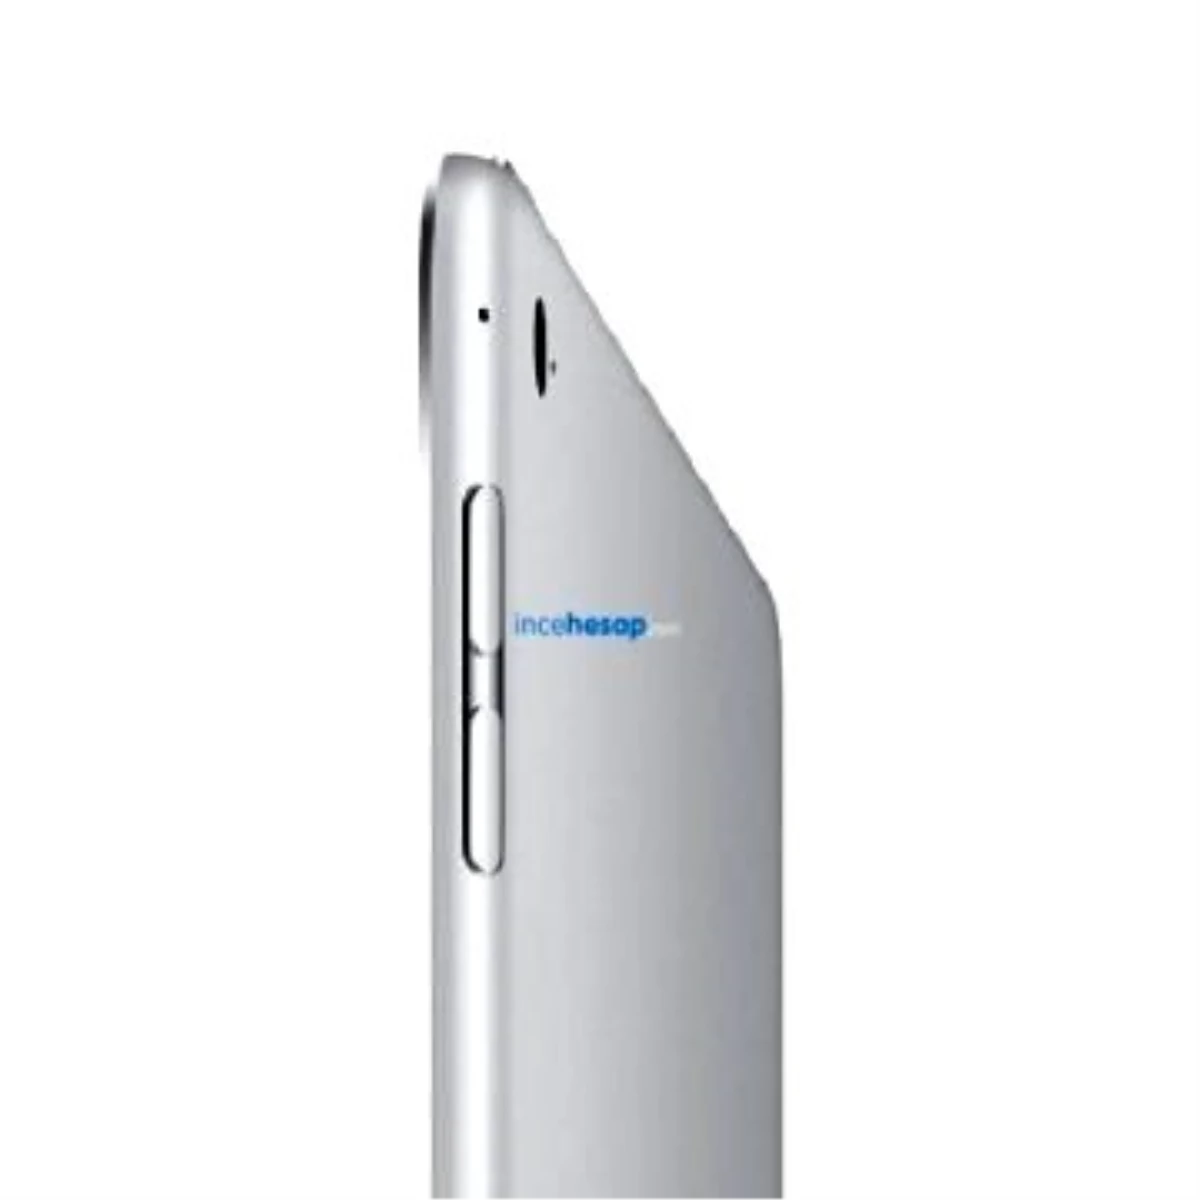 Apple İpad Air2 128gb Wi-Fi Gümüş Tablet (Mgty2tu/a)